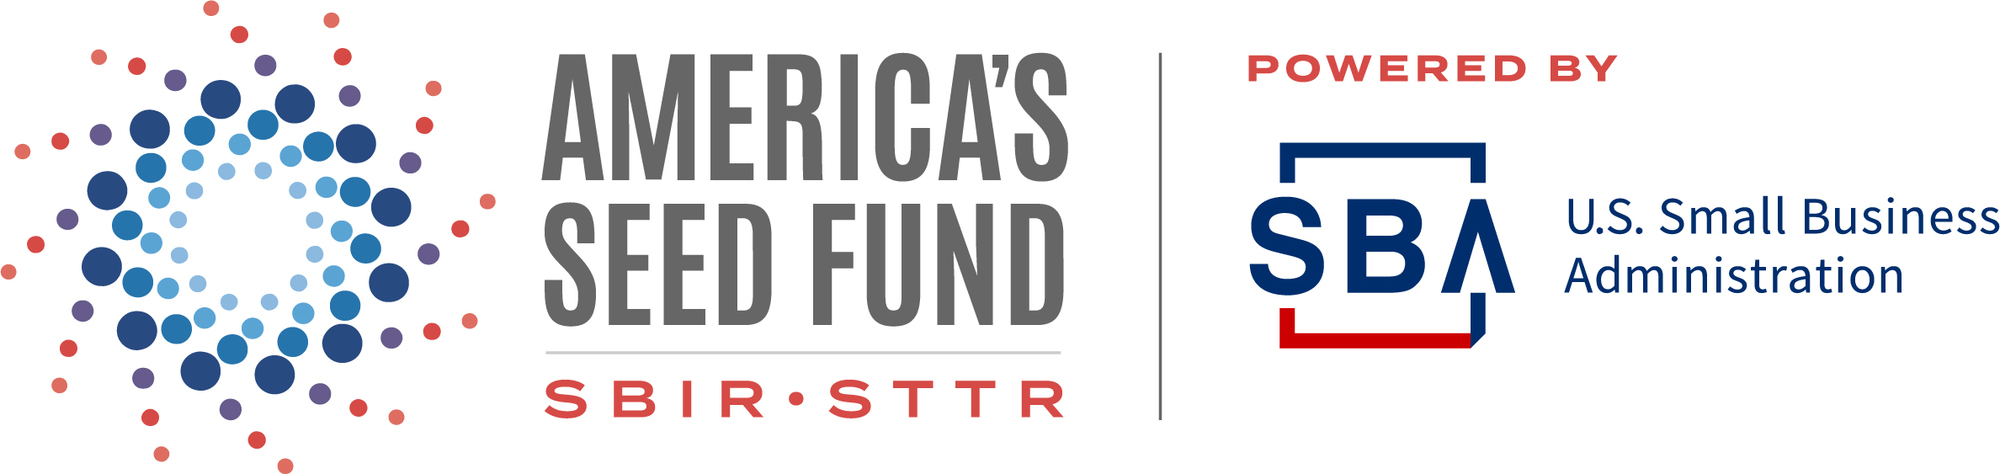 America's Seed Fund logo